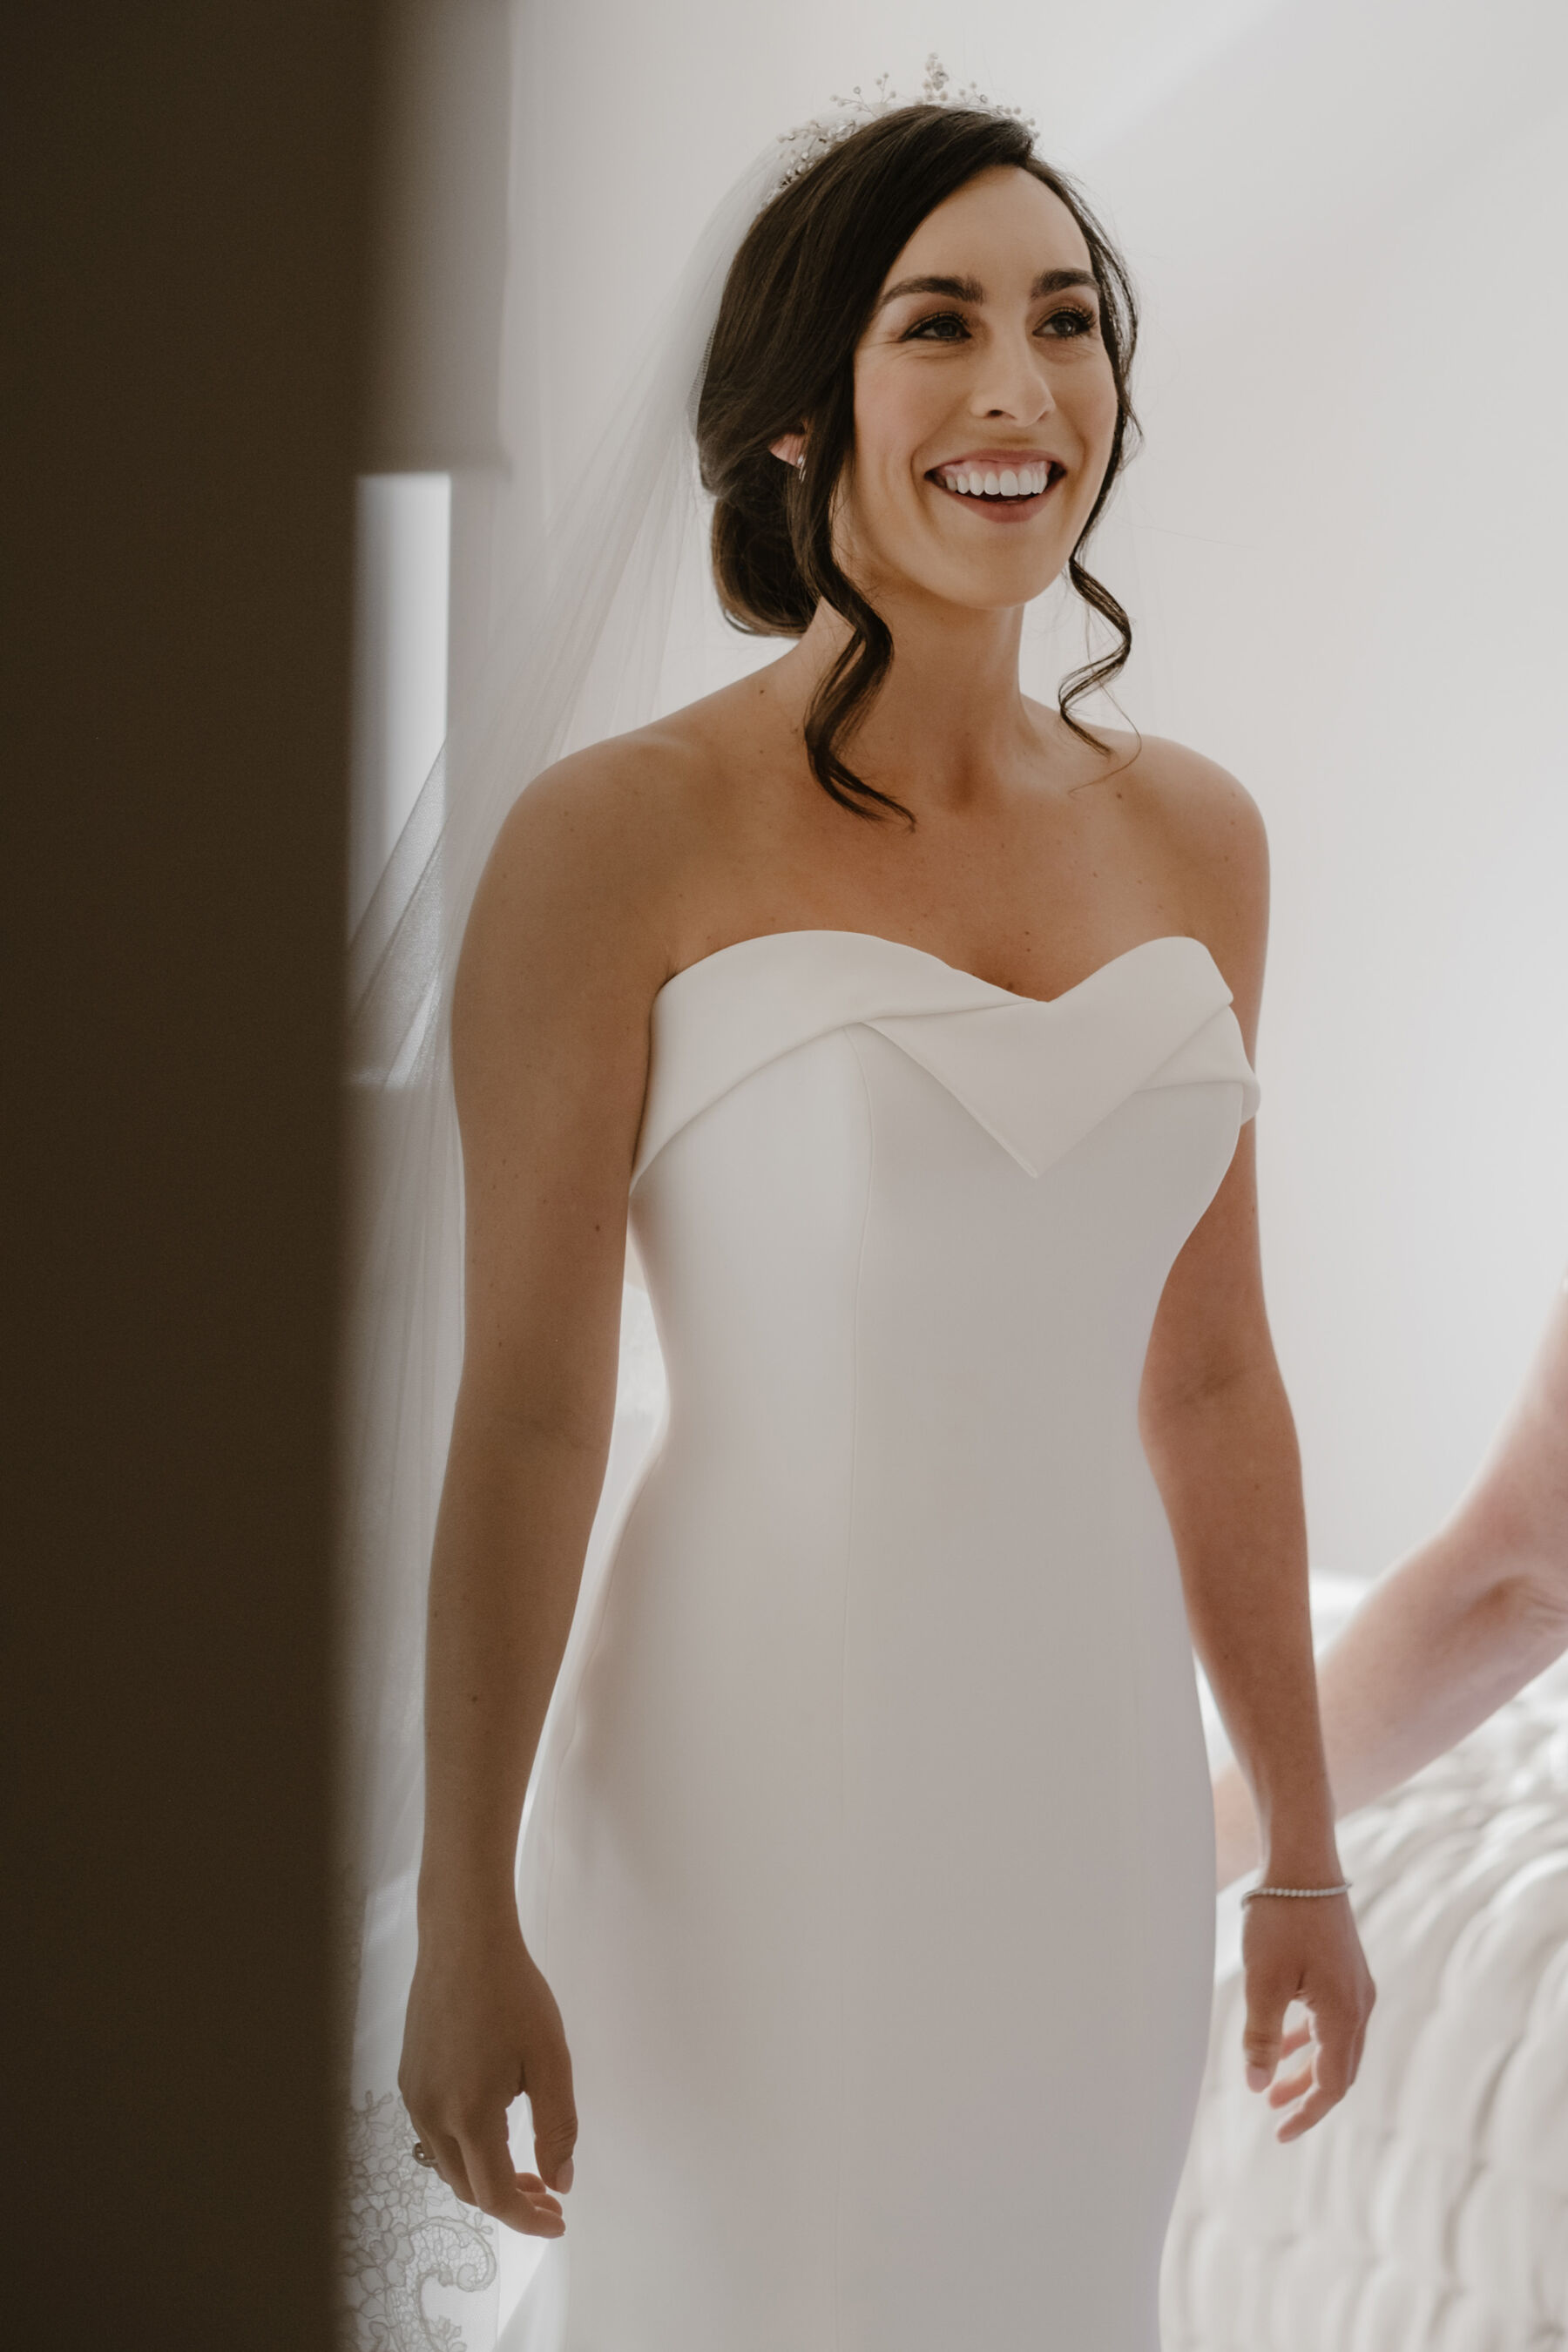 Phillipa Lepley modern, minimalist, sculptured wedding dress.